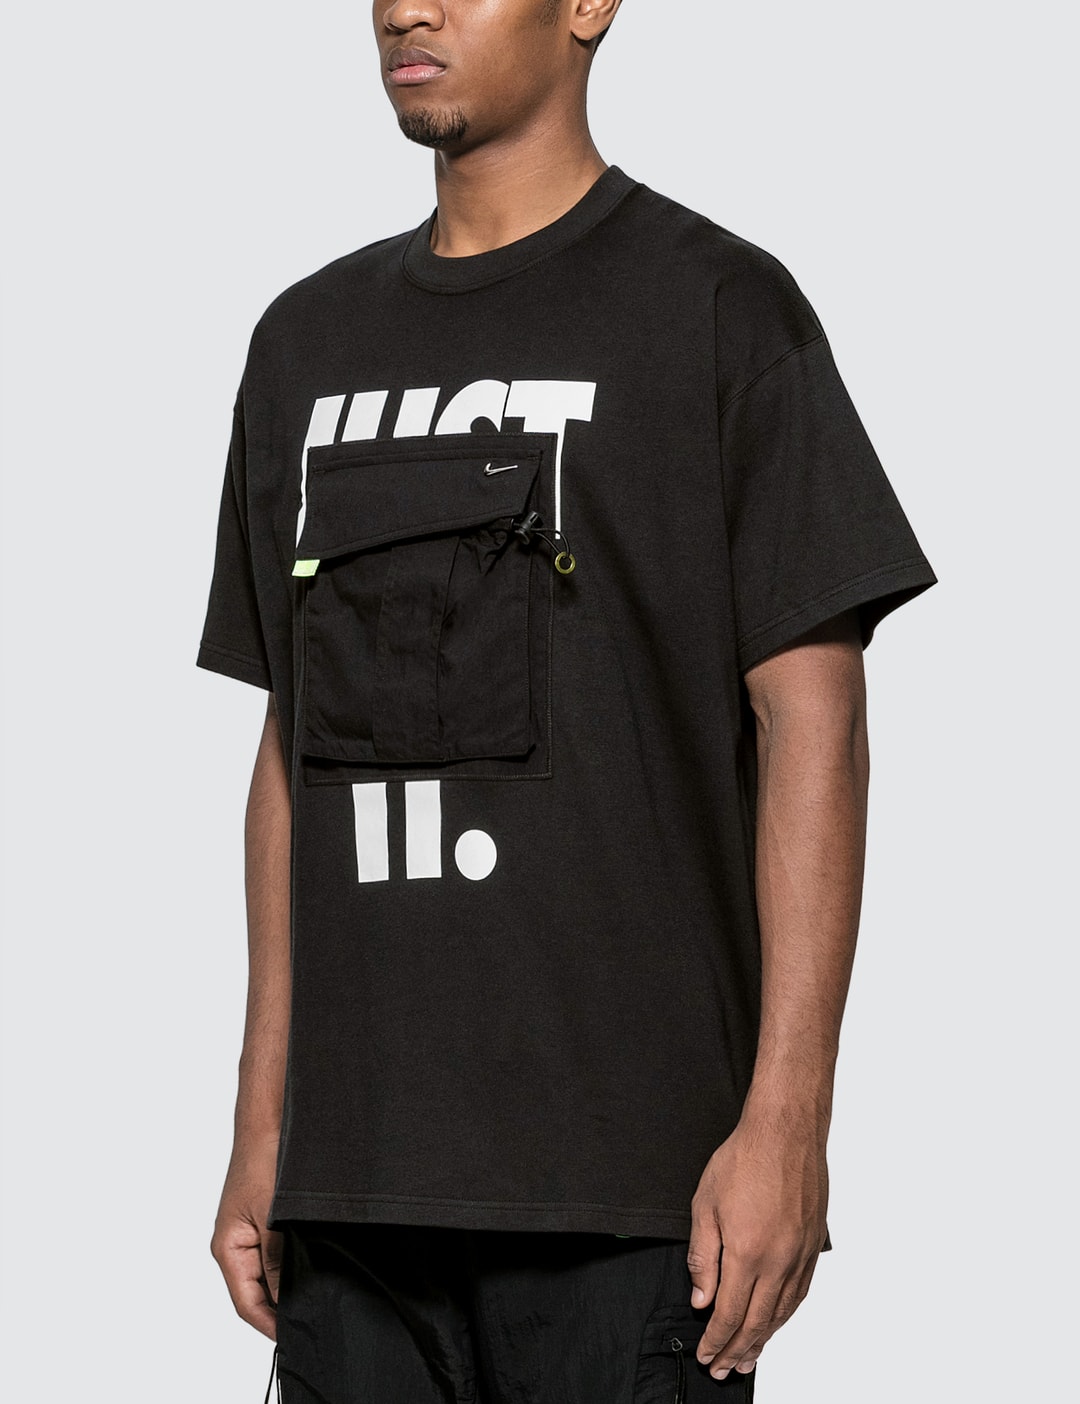 Nike ISPA JDI T-shirt Placeholder Image